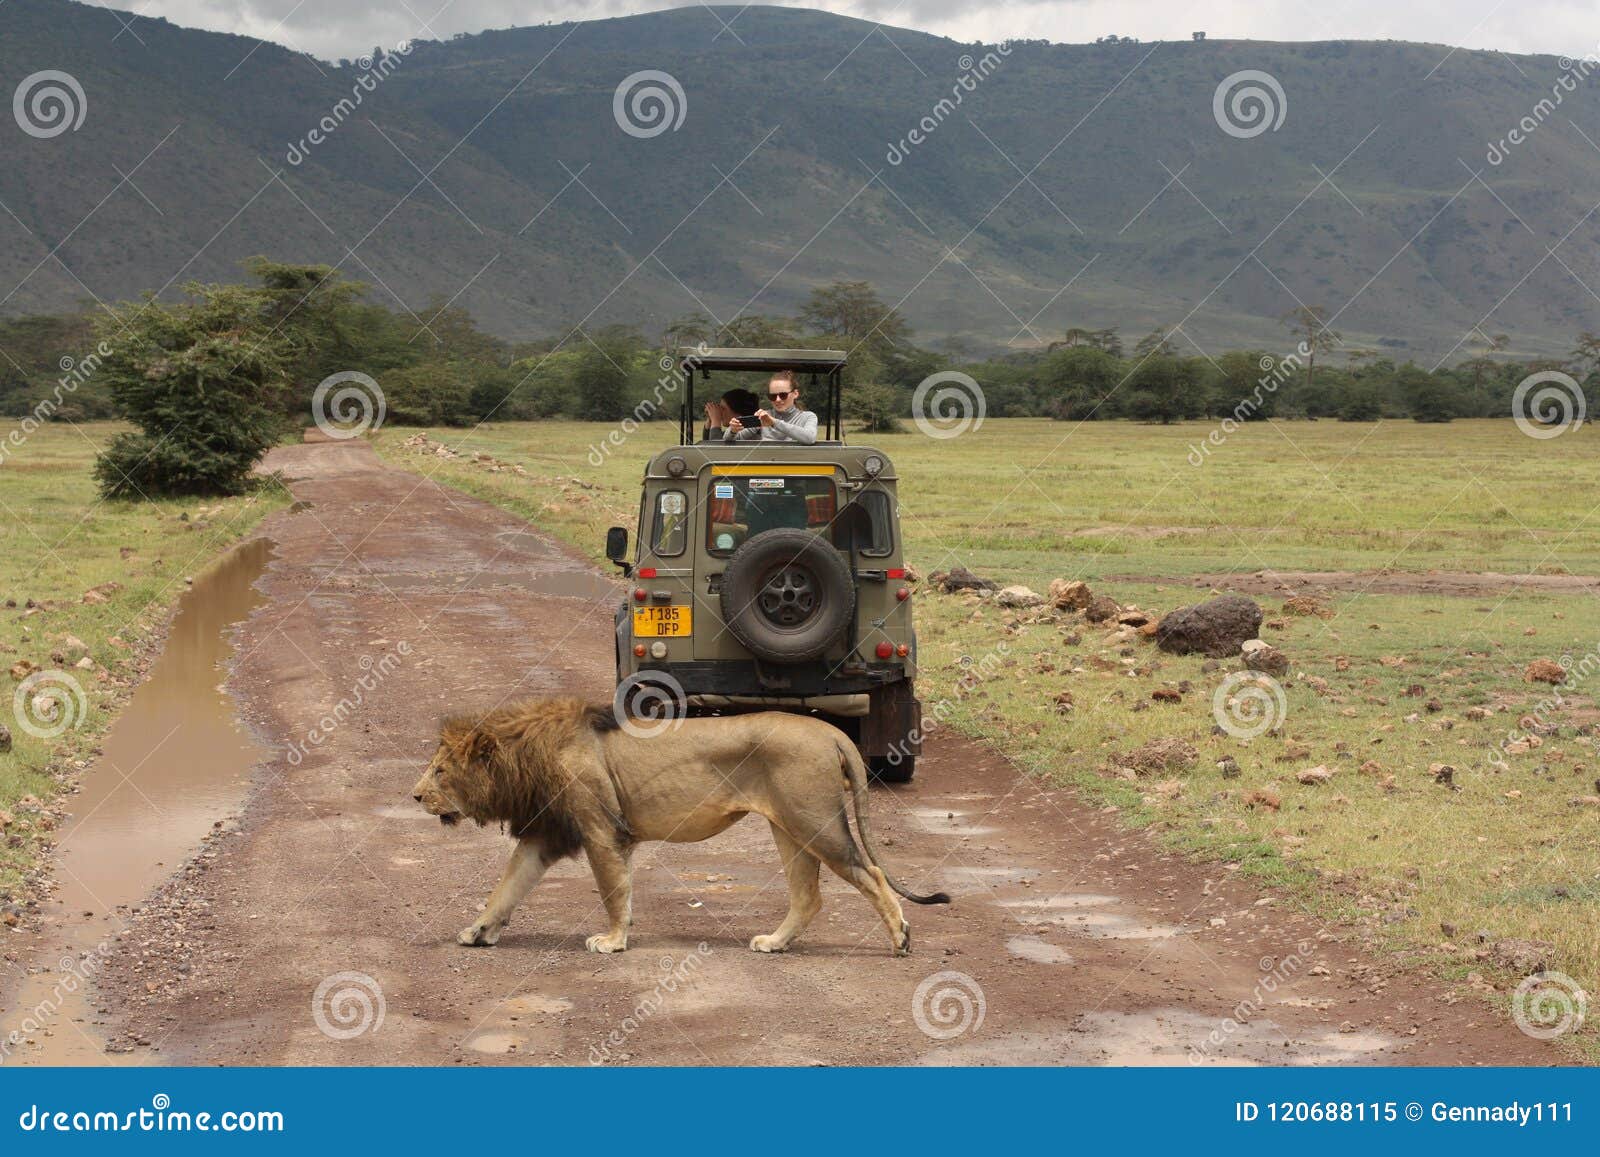 lion safari road